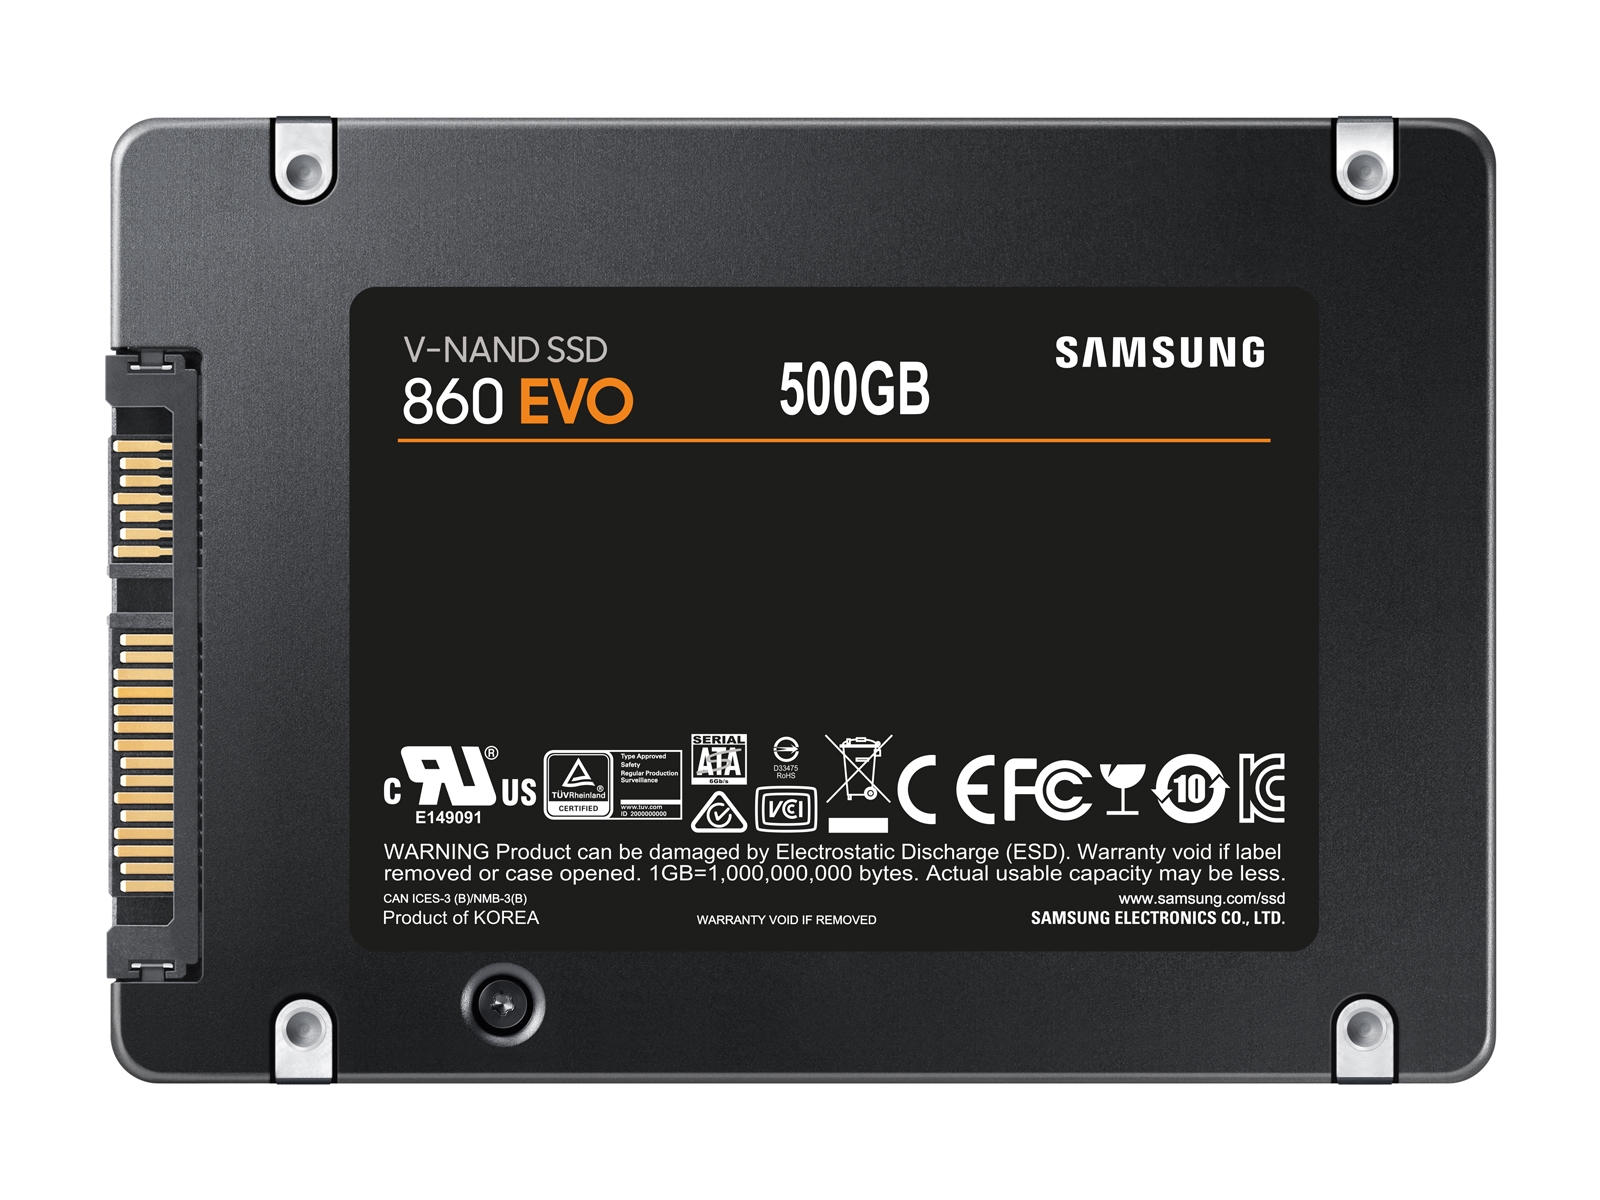 SSD 860 EVO SATA III 500GB Memory & Storage - MZ-76E500B/AM | Samsung US